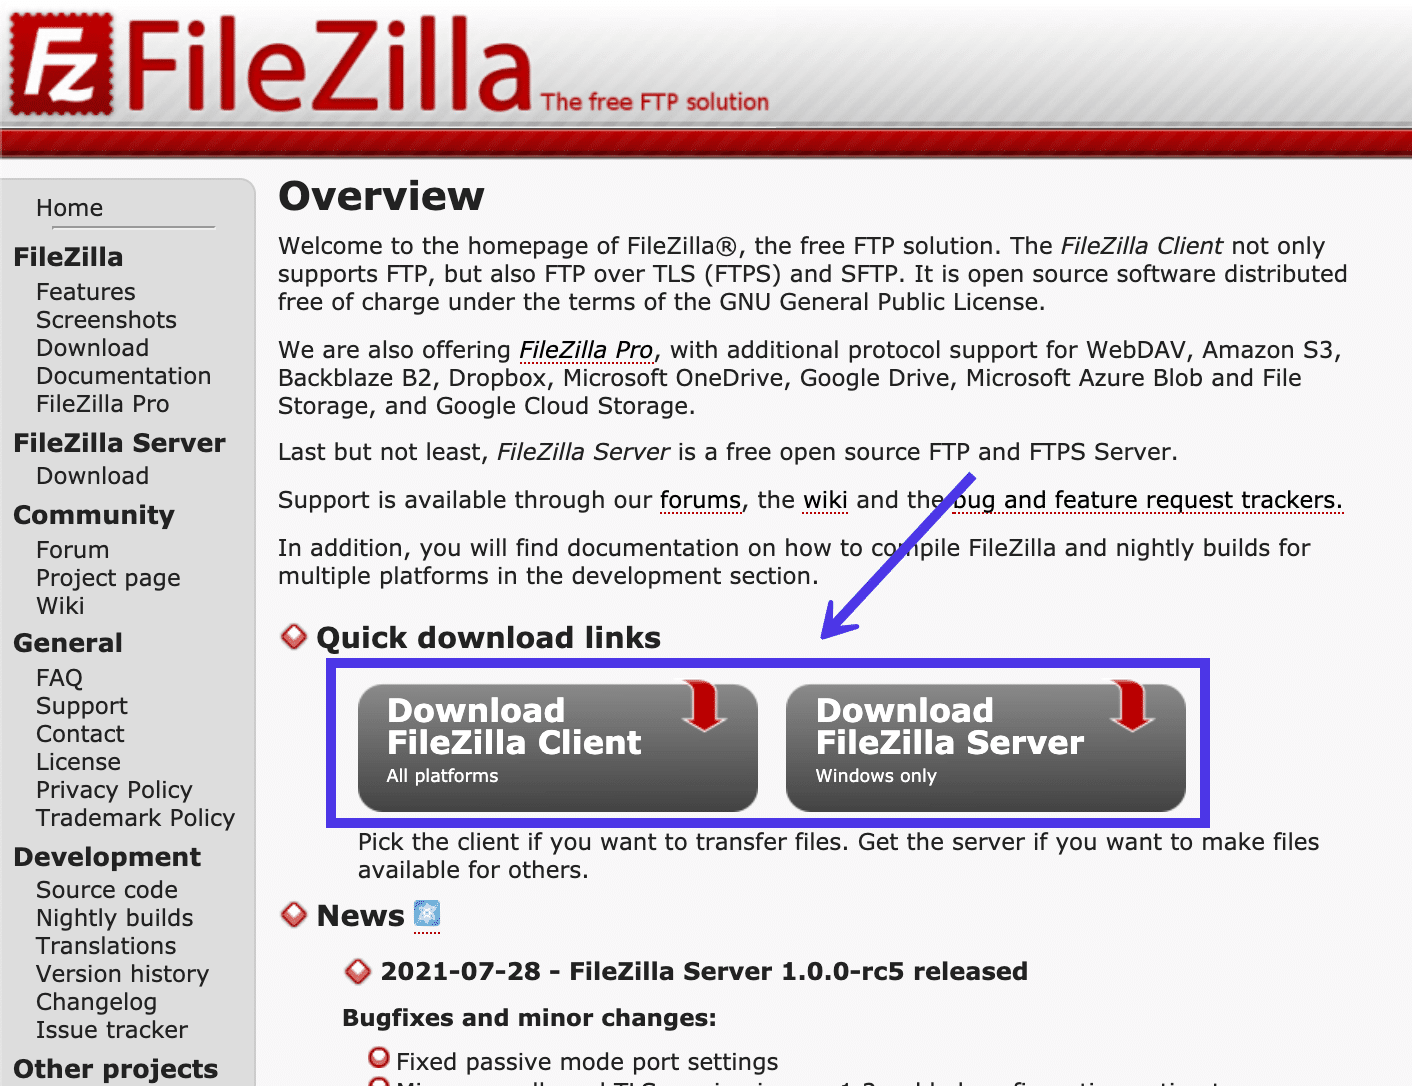 To kickstart the installation process, click the Download FileZilla Client button.